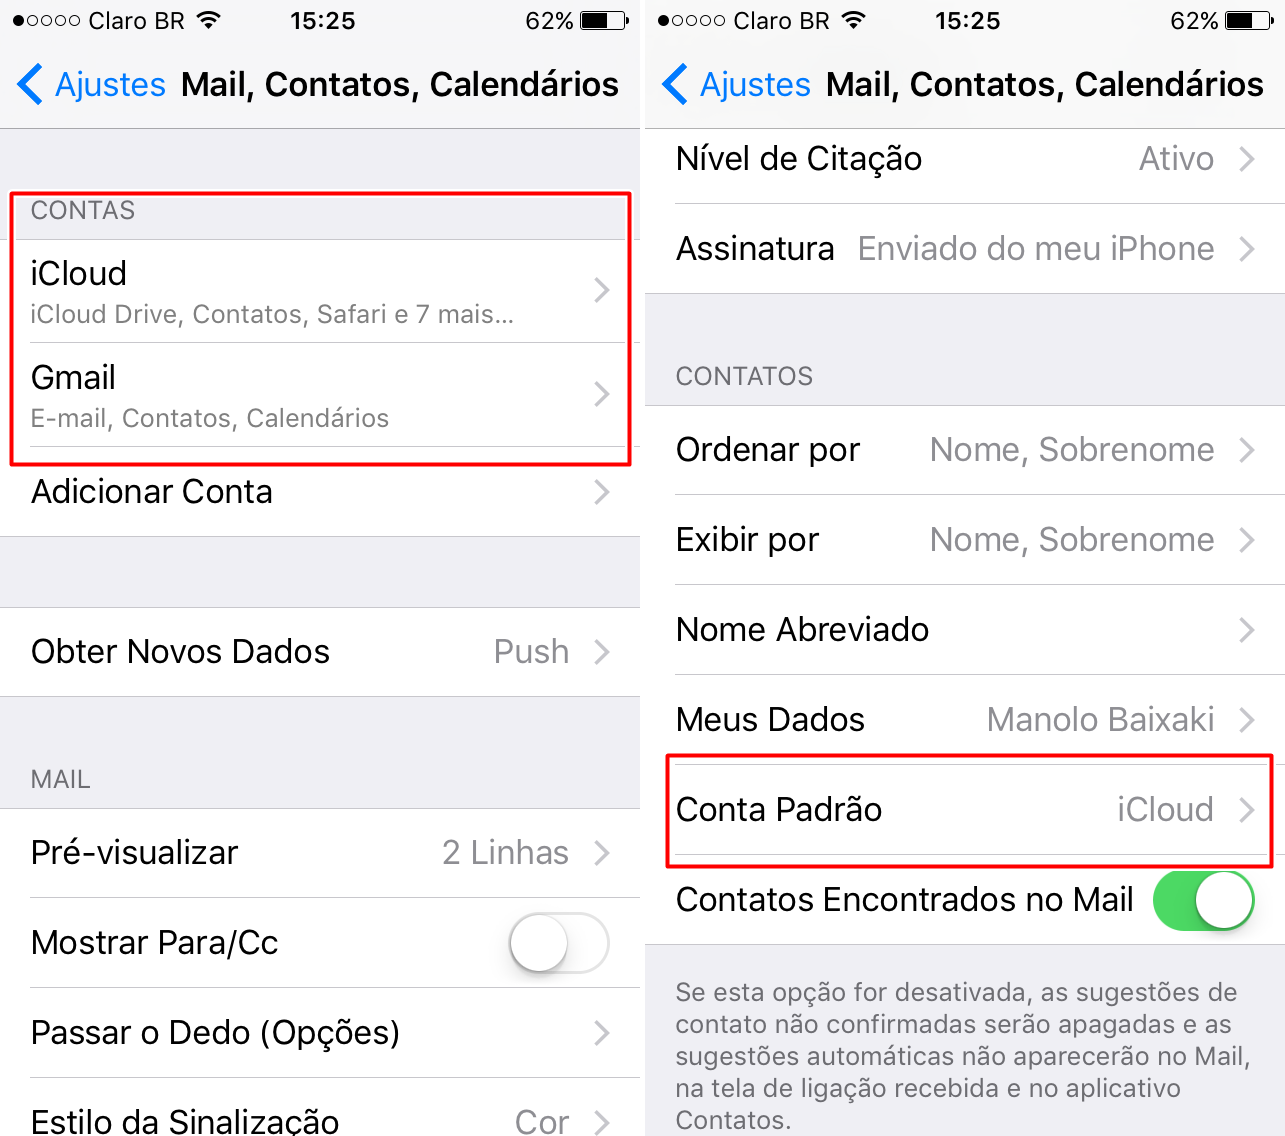 Trocou de celular? Veja como transferir fotos do iPhone para o Android -  Giz Brasil